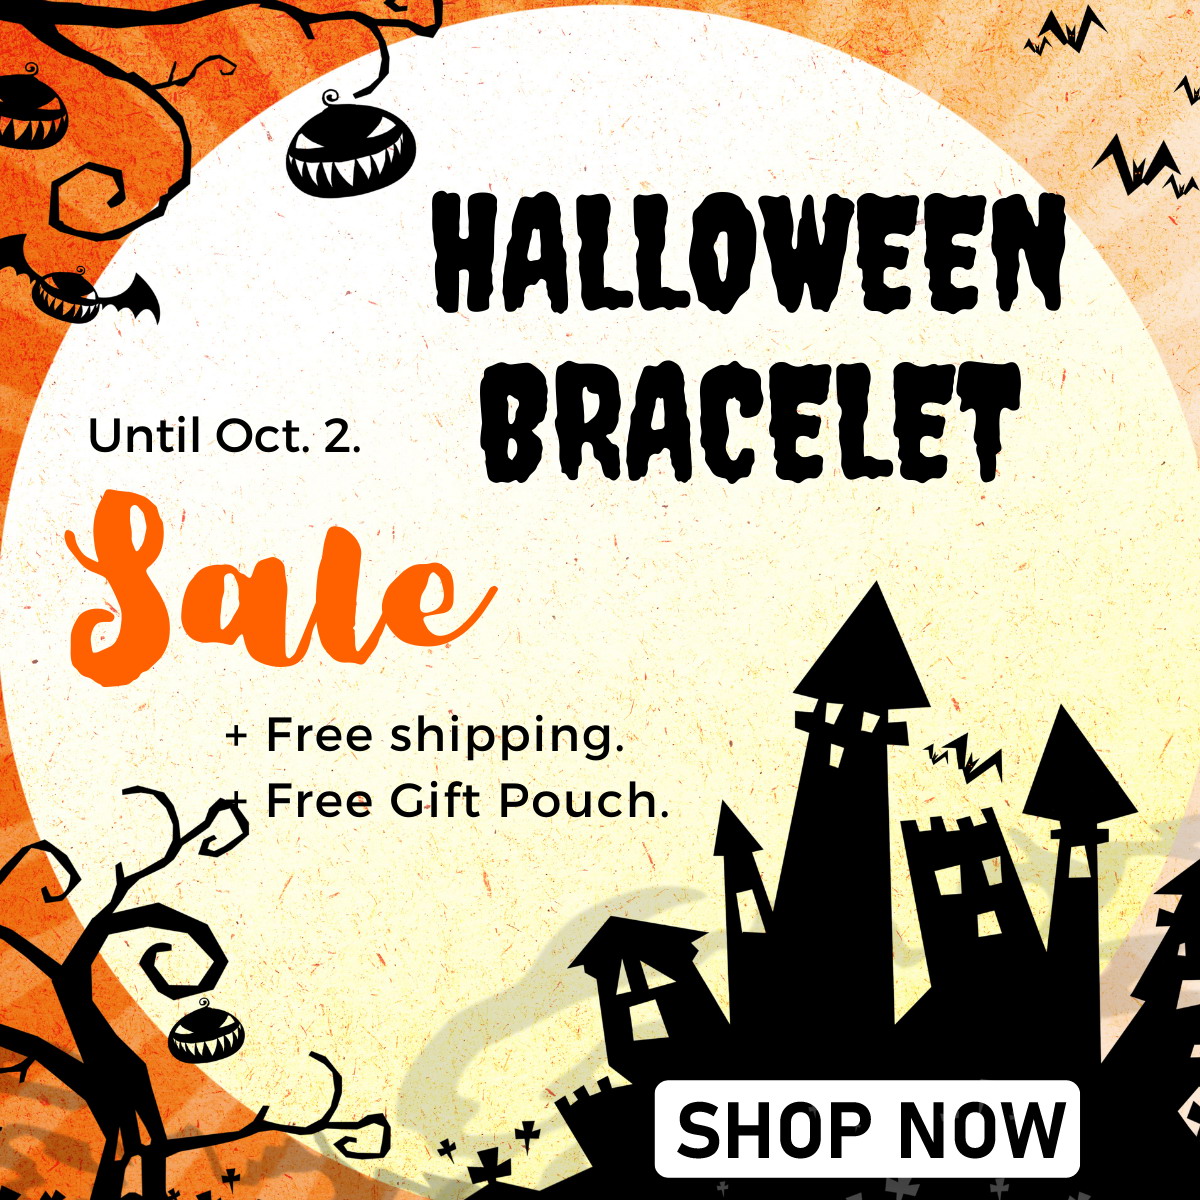 fionaaccessories.com Halloween bracelets sale + free shipping until 10/2/2022.